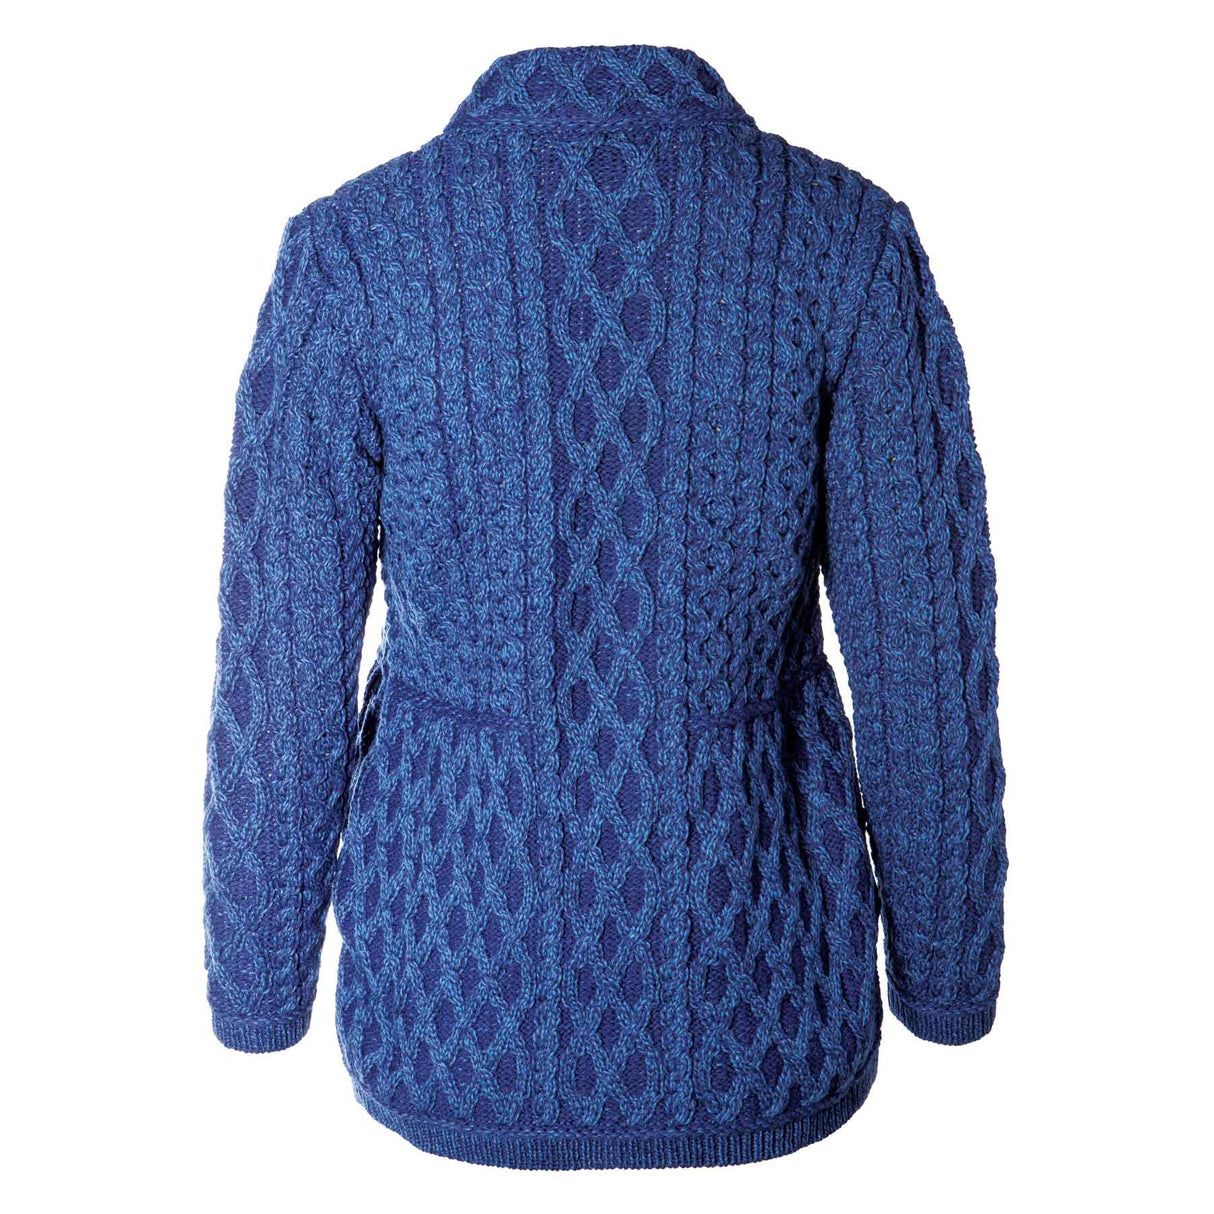 Zip Up Irish Aran Cardigan, Marl Blue, 100% Merino Wool - Creative Irish Gifts